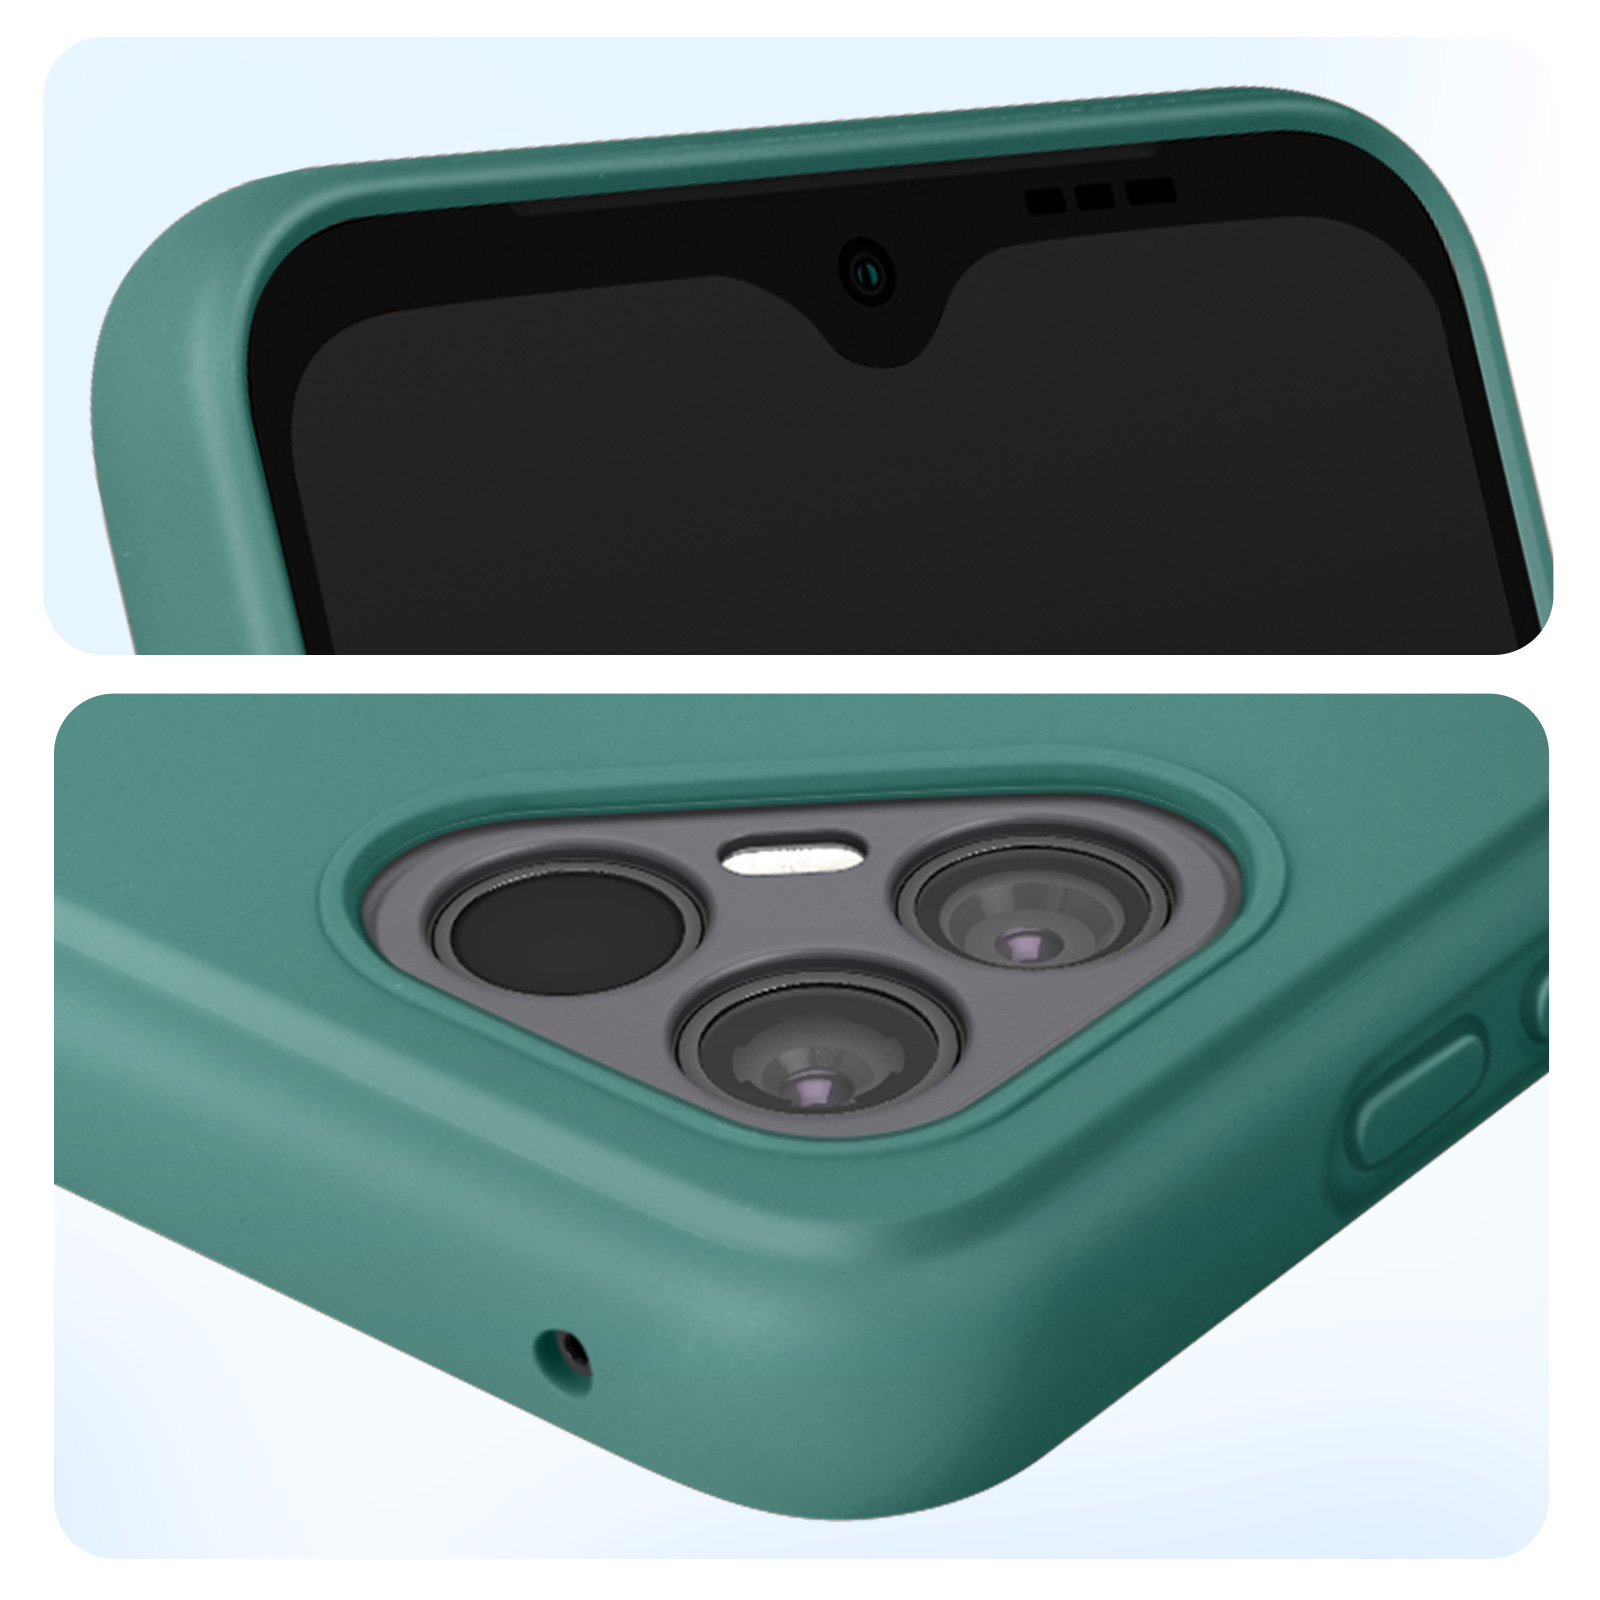 Case, 4, Bumper, Fairphone FAIRPHONE Fairphone, Soft Protective Green